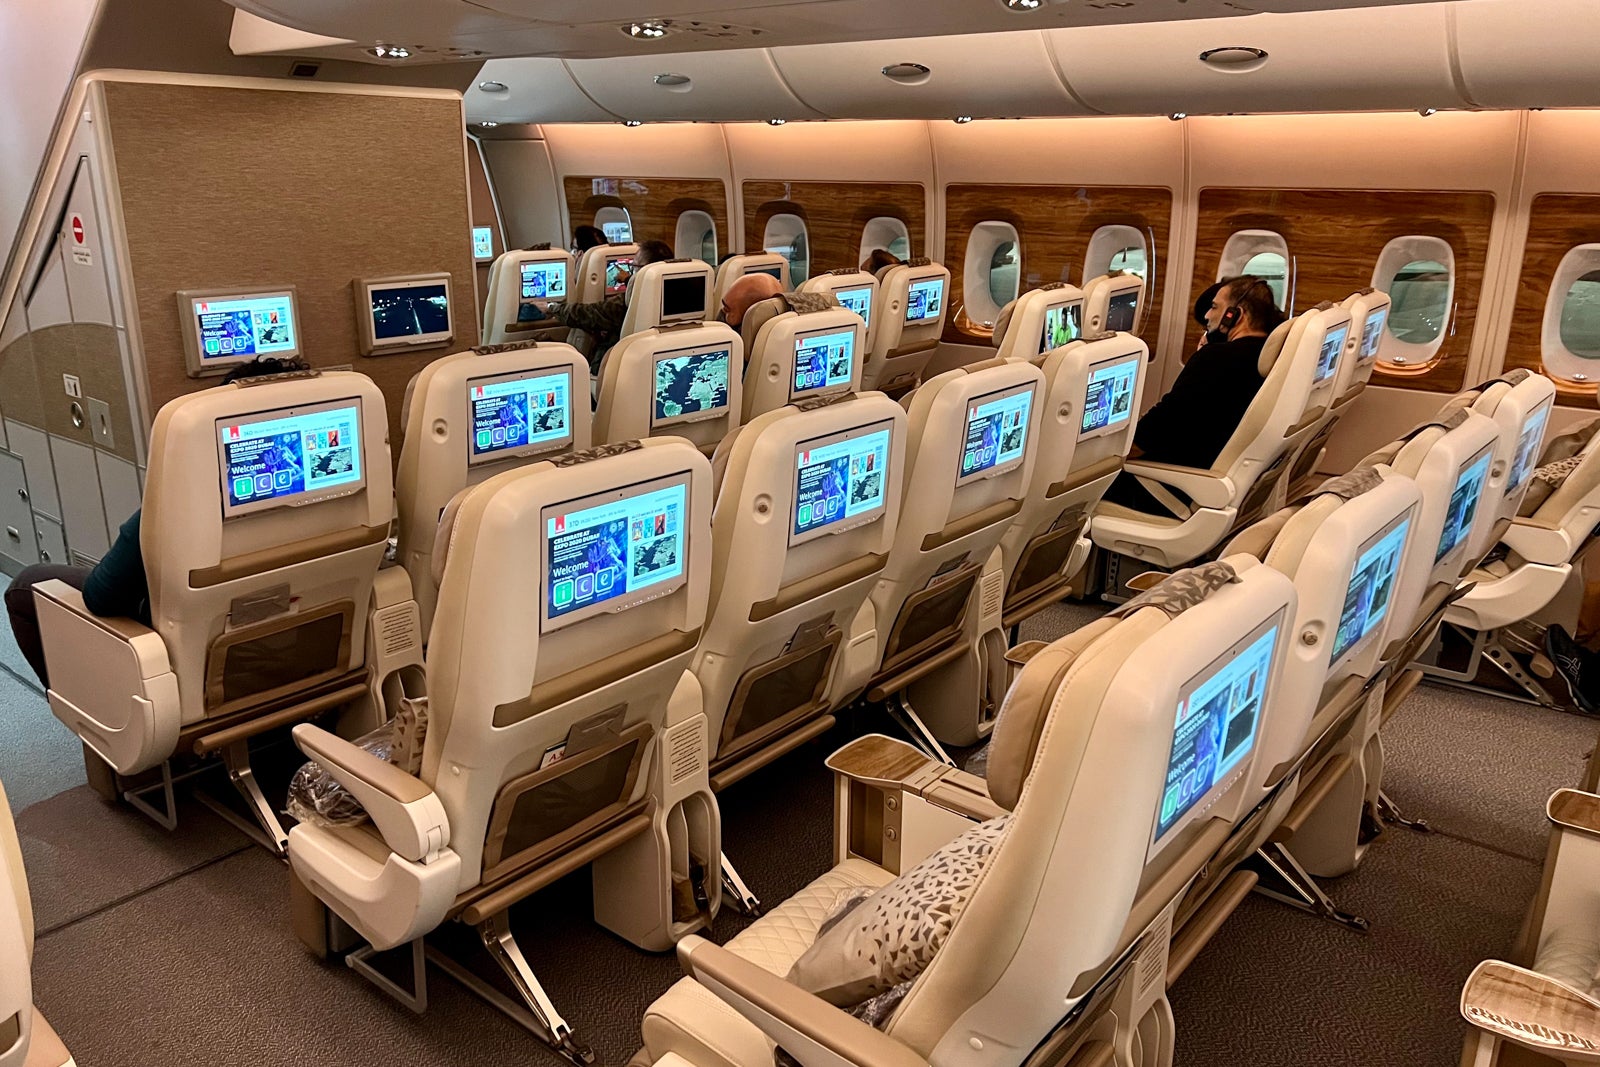 Premium Economy, Cabin Features, The Emirates Experience